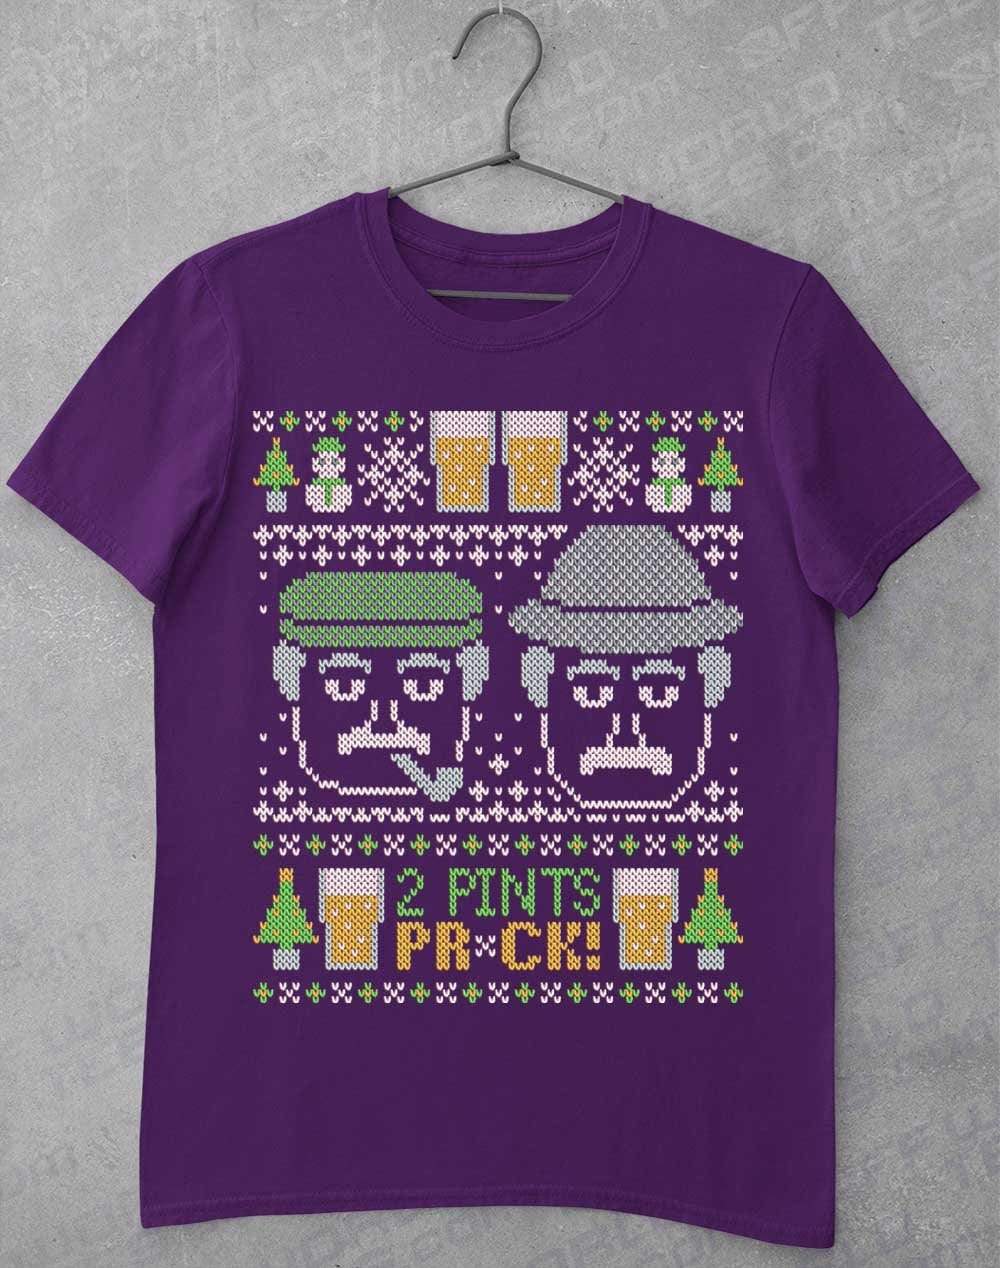 Craiglang Christmas 2 Pints Knit Pattern T-Shirt S / Purple  - Off World Tees